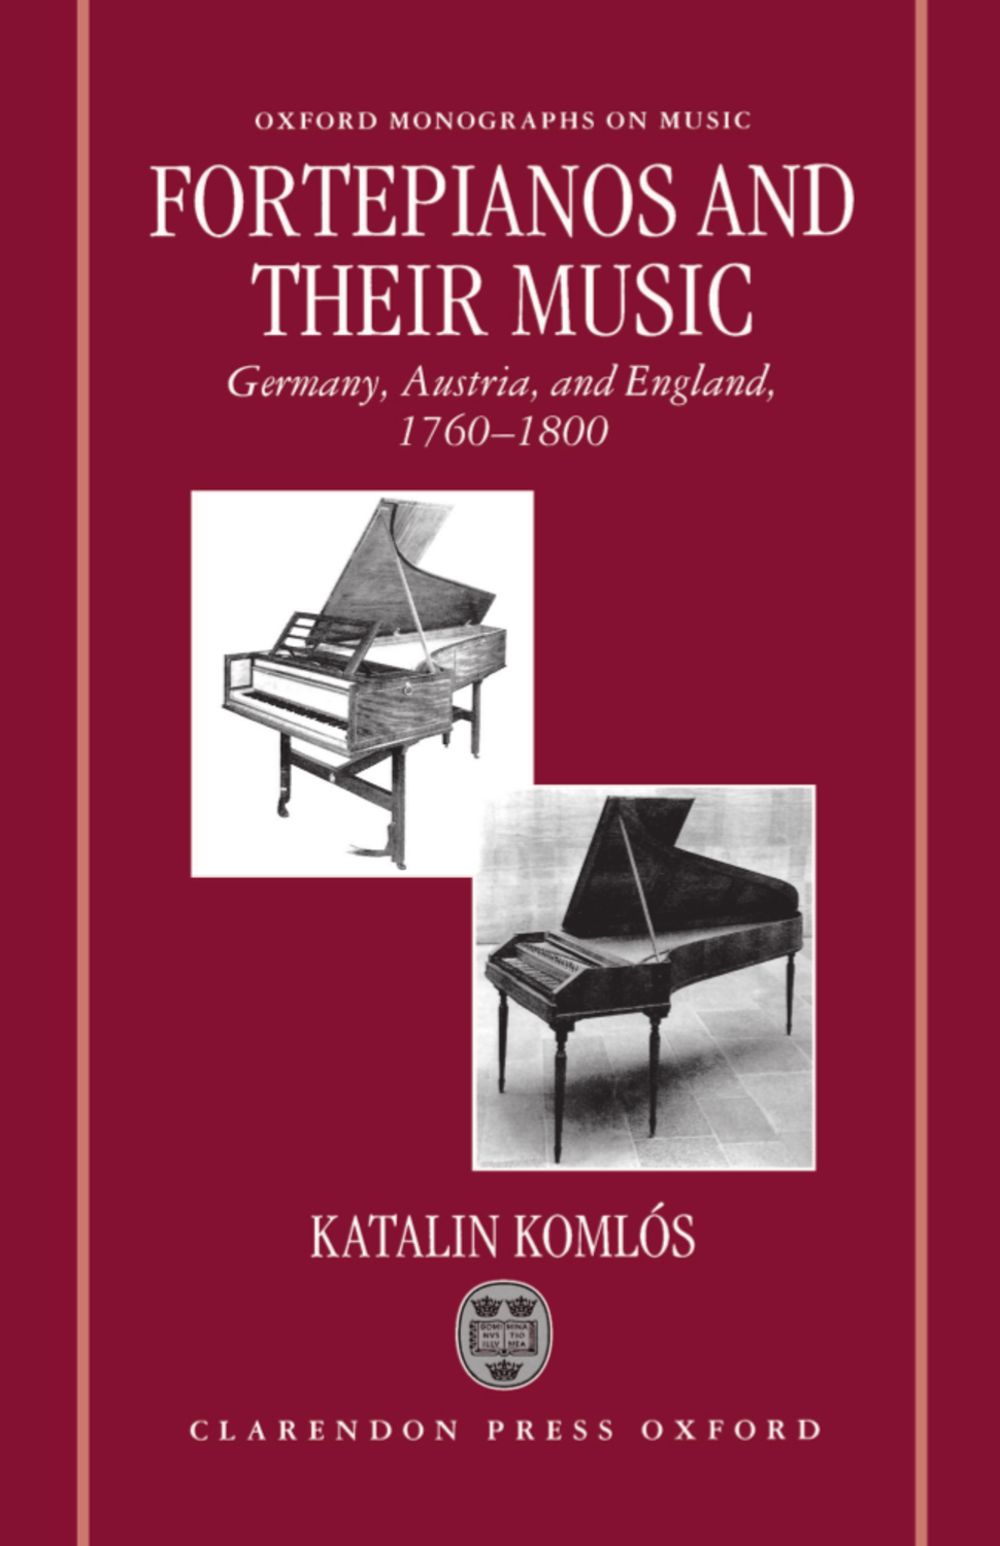 Komlos Fortepianos And Their Music Hardback Sheet Music Songbook